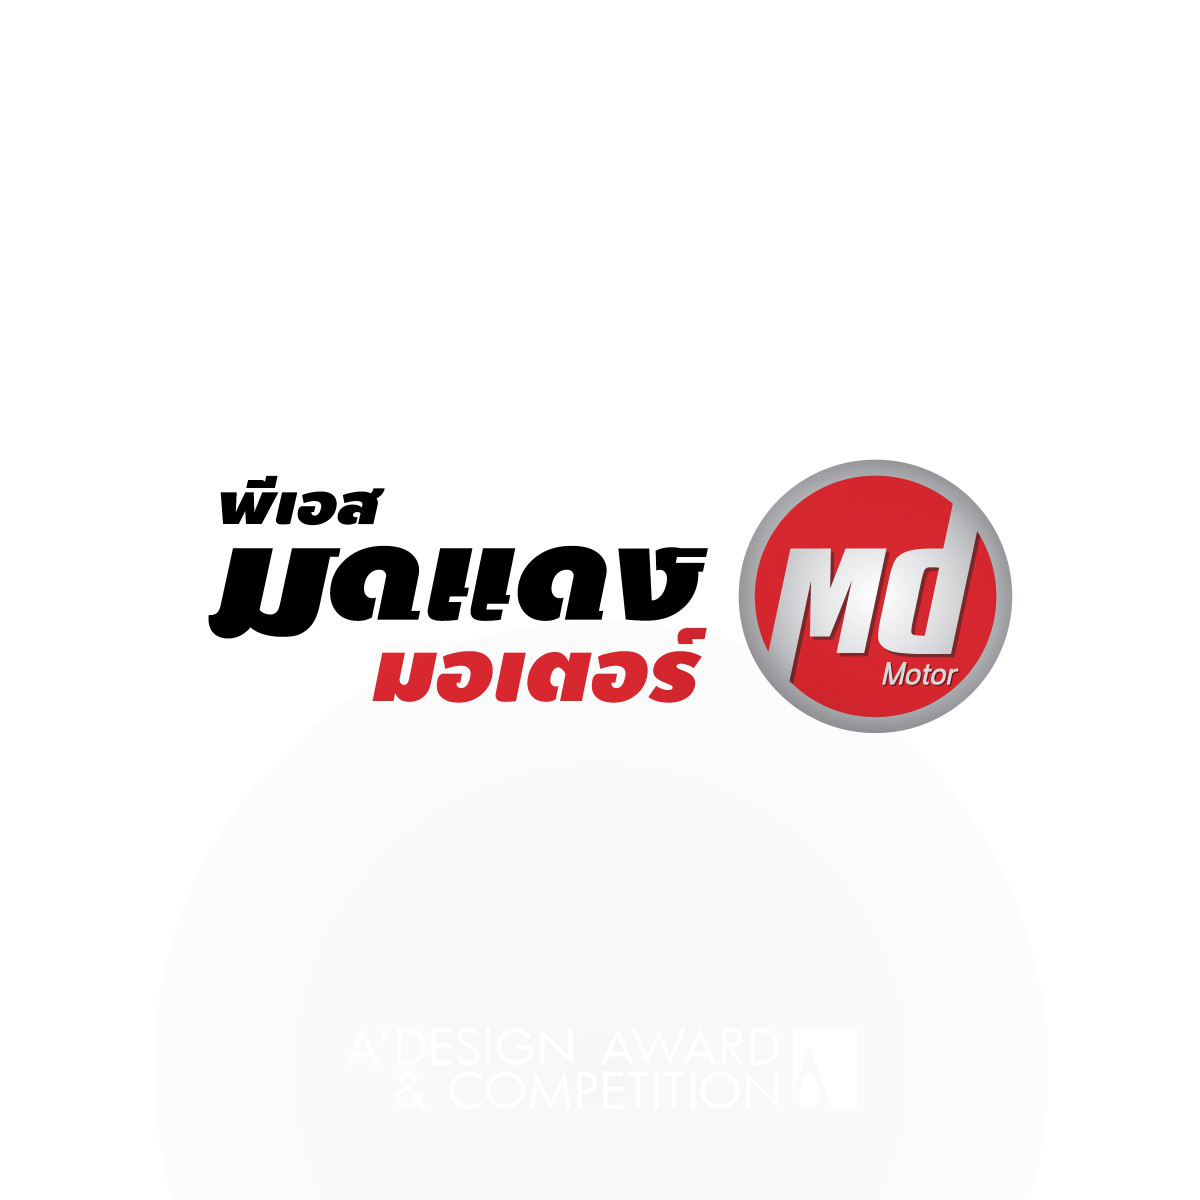 Moddaeng Motor Logo and VI by Natchamol Uasrikongsuk